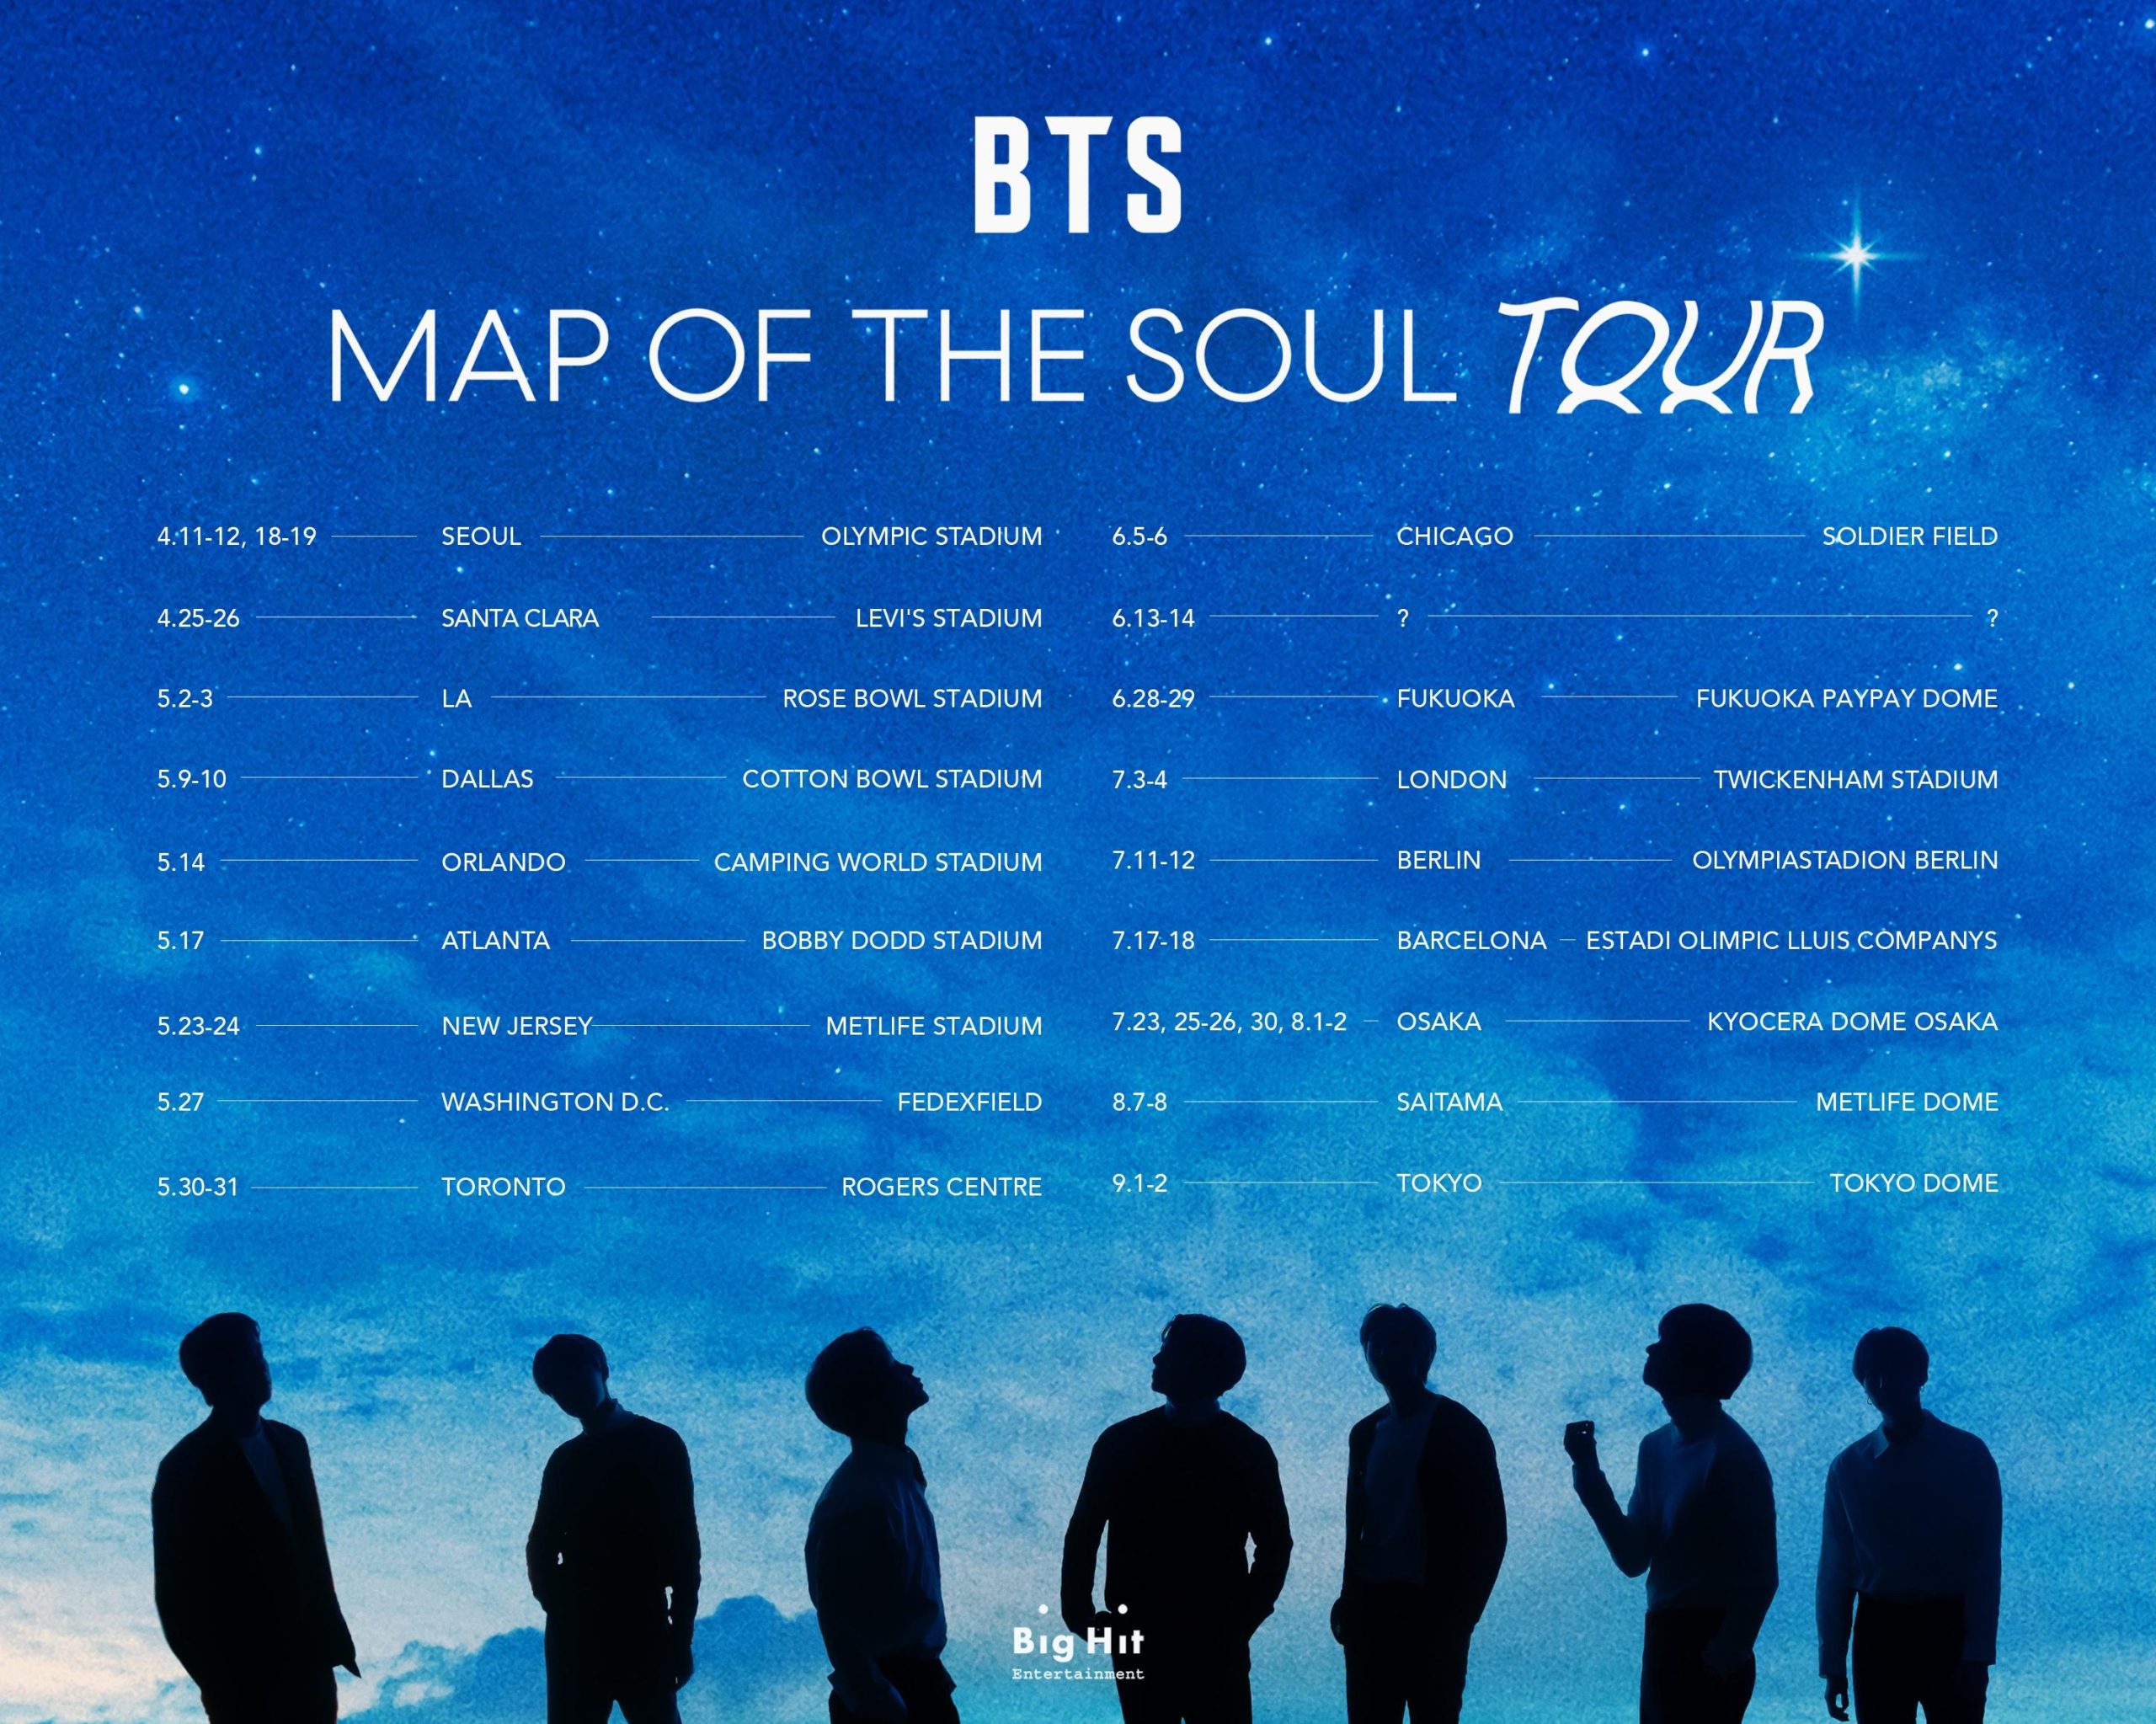 BTSワールドツアー「BTS MAP OF THE SOUL TOUR」開催決定 | PODA2560 x 2047